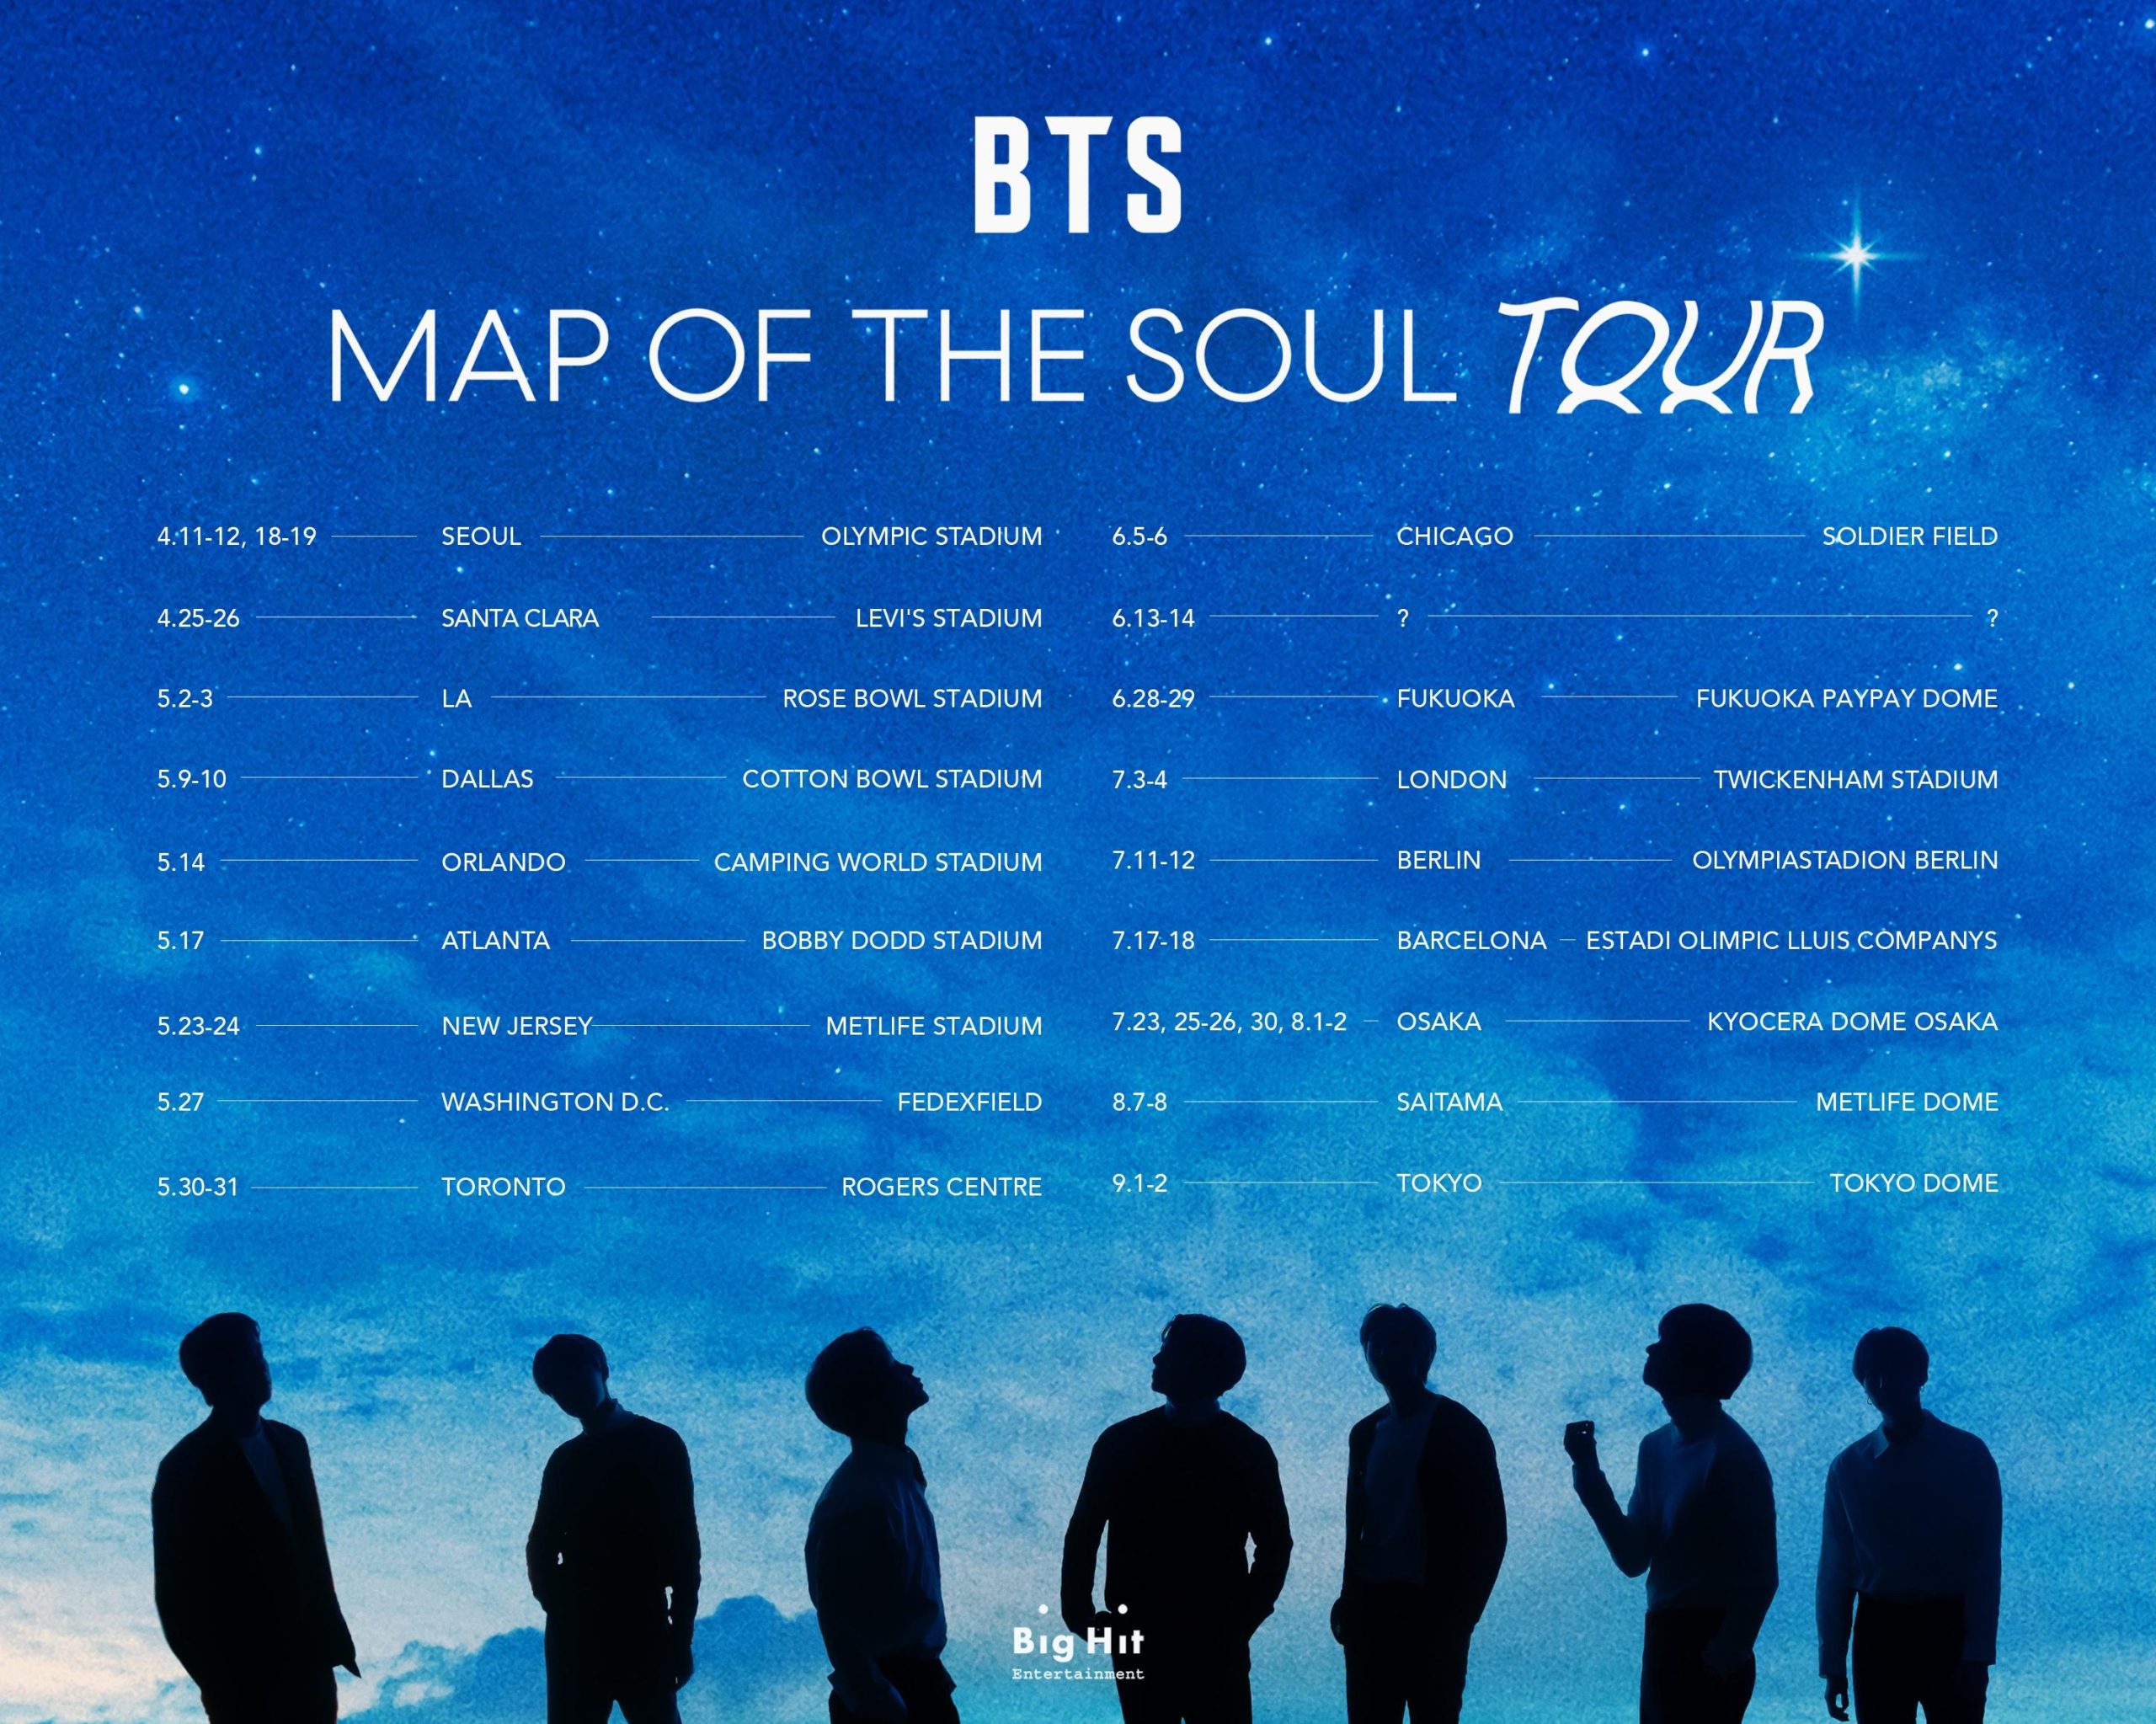 BTSワールドツアー「BTS MAP OF THE SOUL TOUR」開催決定 | PODA2560 x 2047